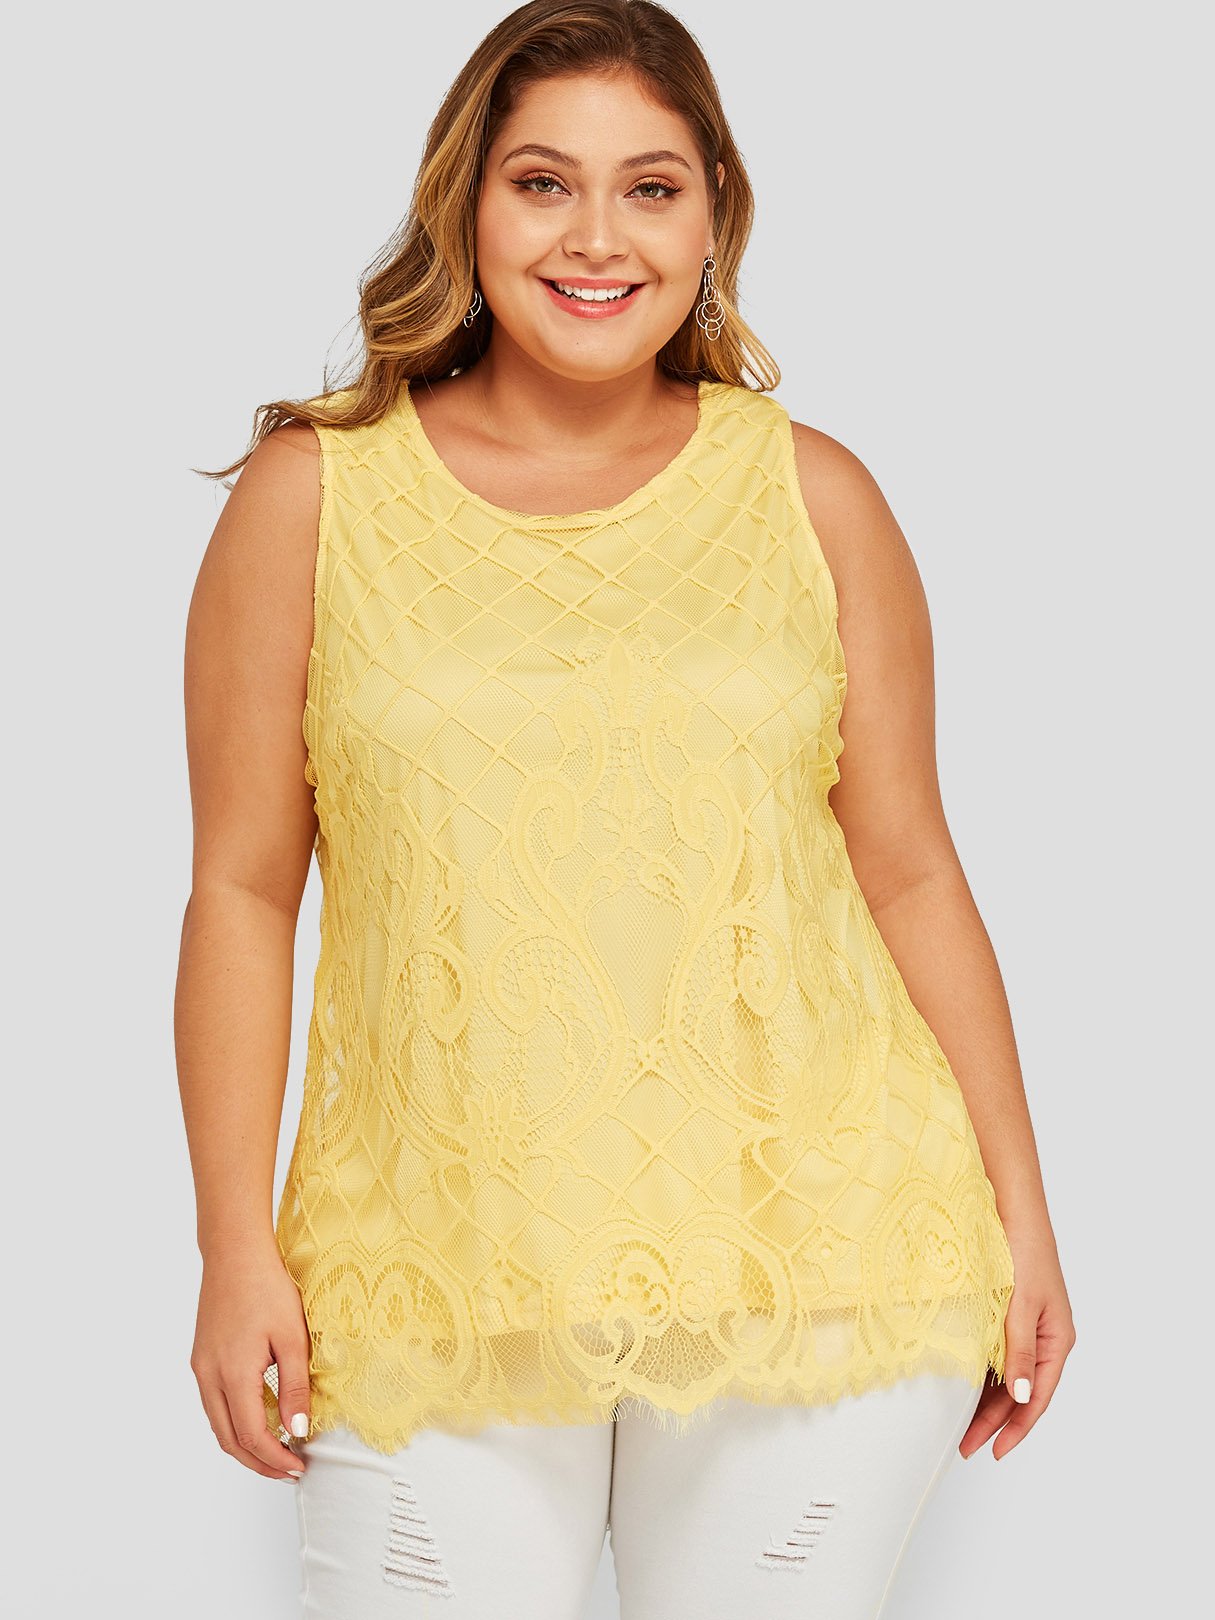 Wholesale Round Neck Embroidered Sleeveless Yellow Plus Size Tops